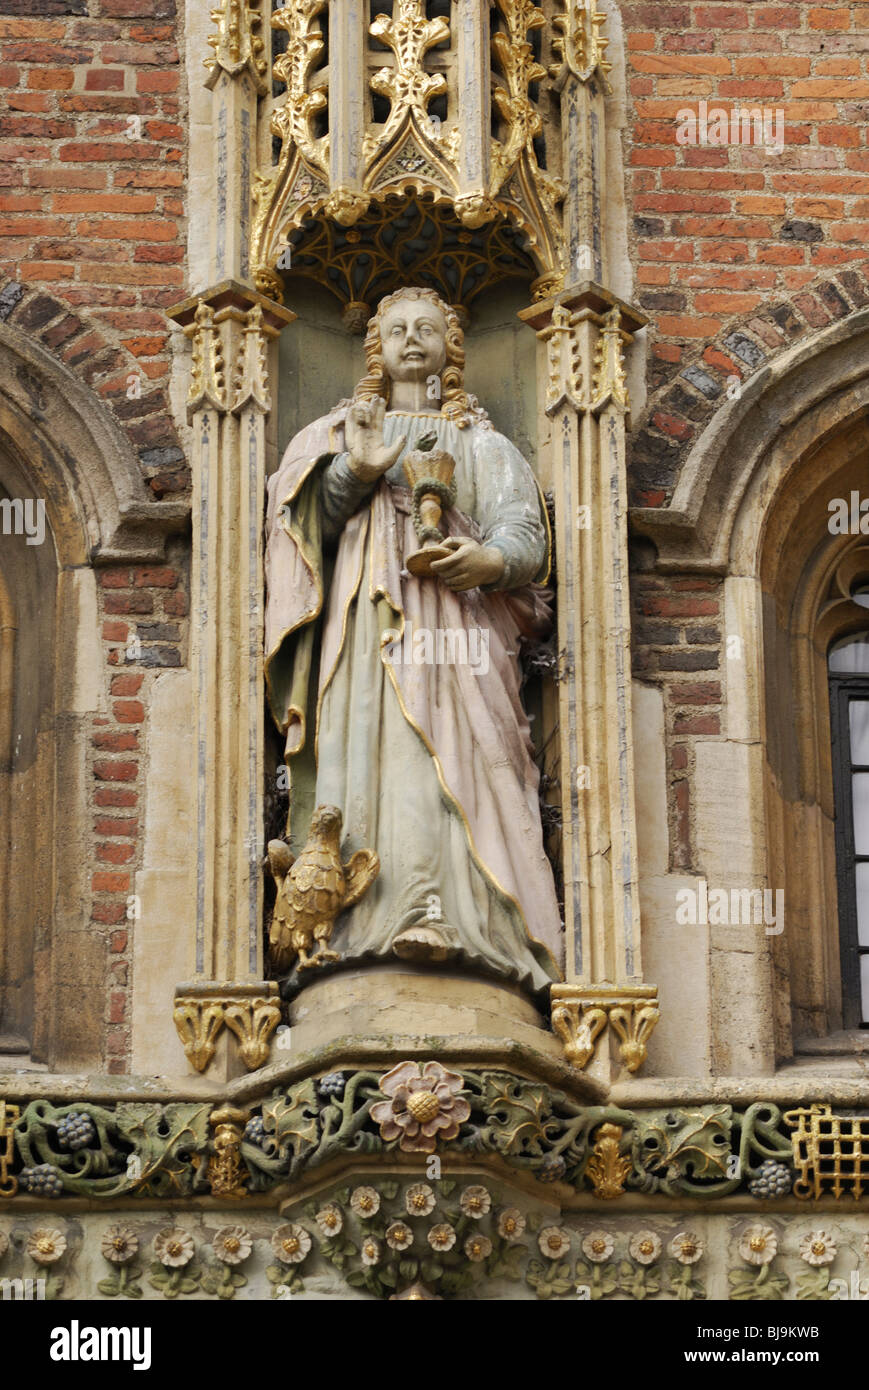 Statue of St John the Baptist on St Johns College Gatehouse, Cambridge, England, UK Stock Photo